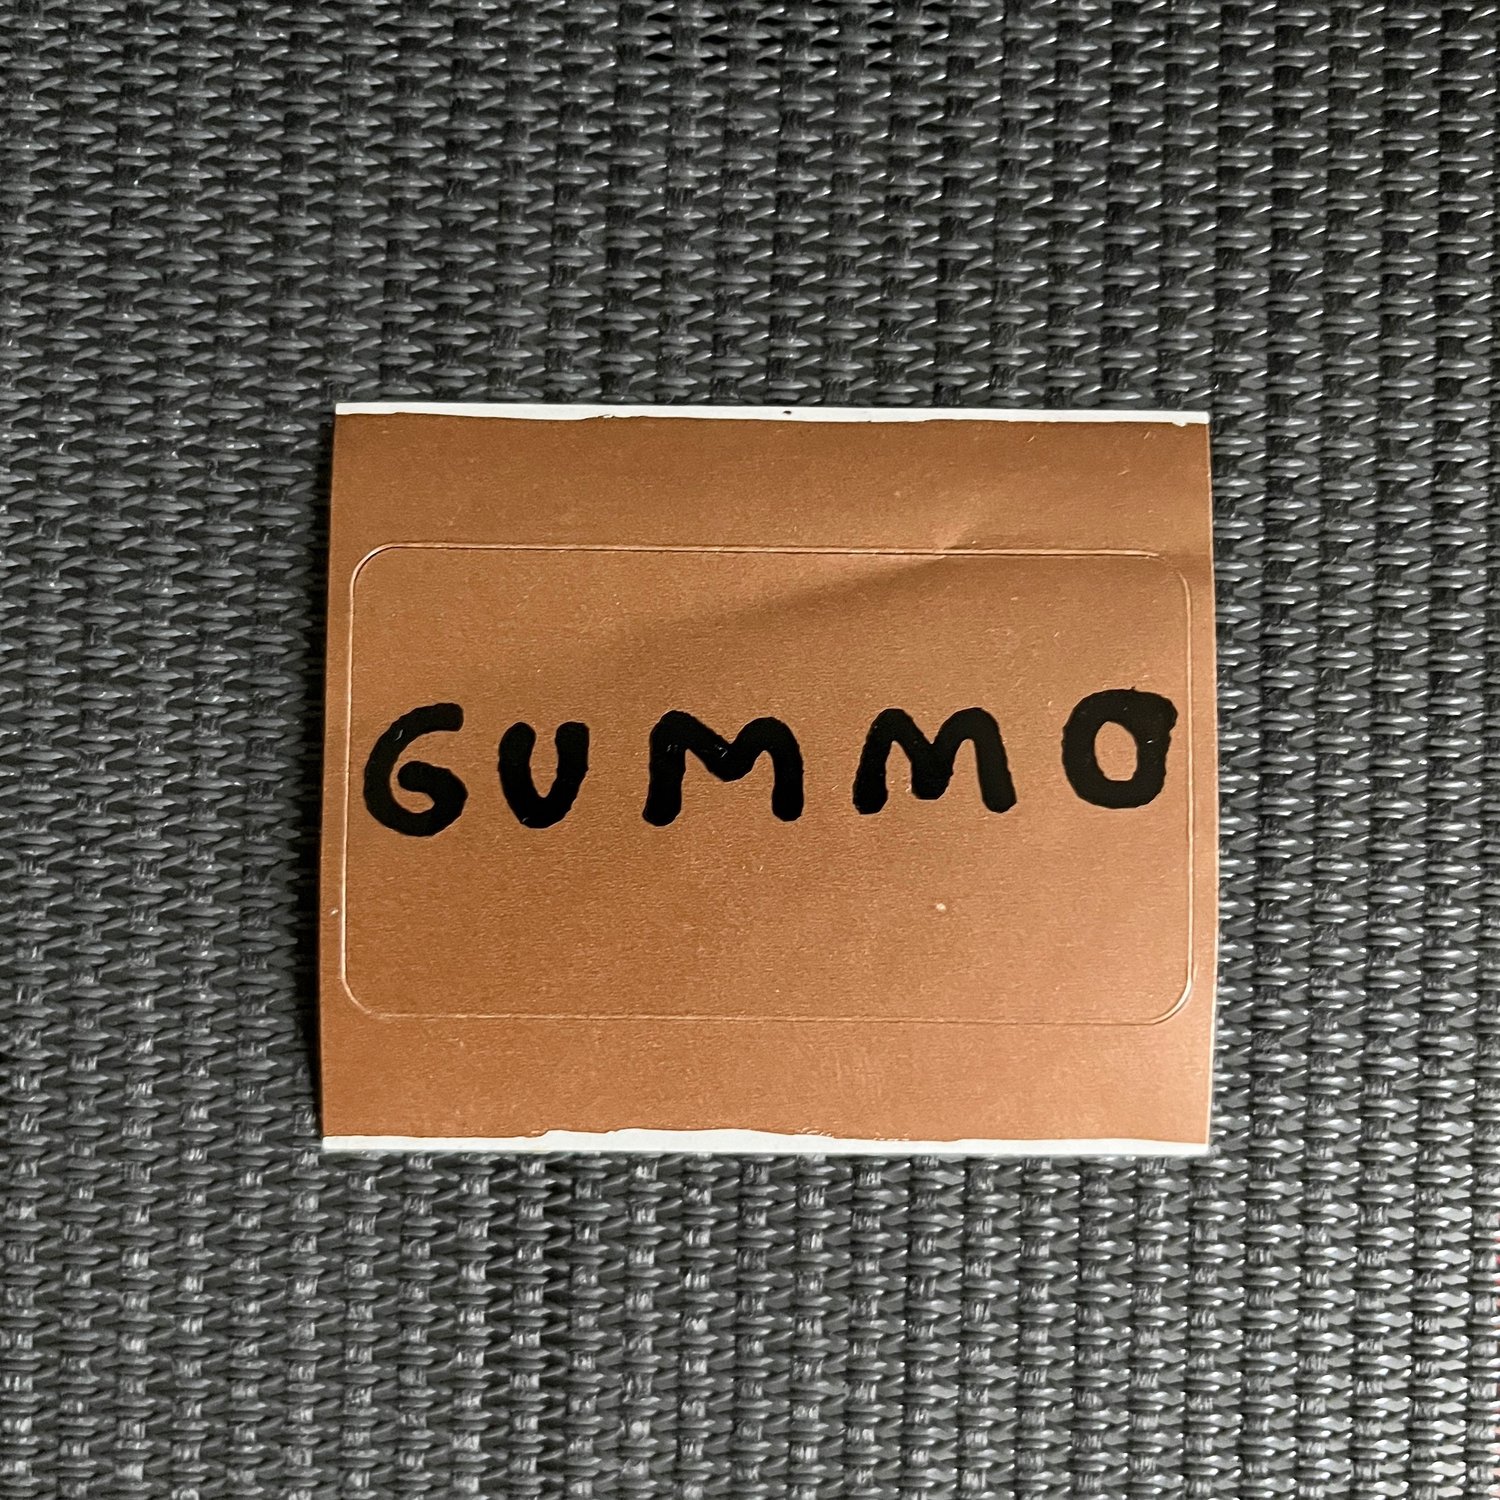 Image of Gummo Promotional Sticker